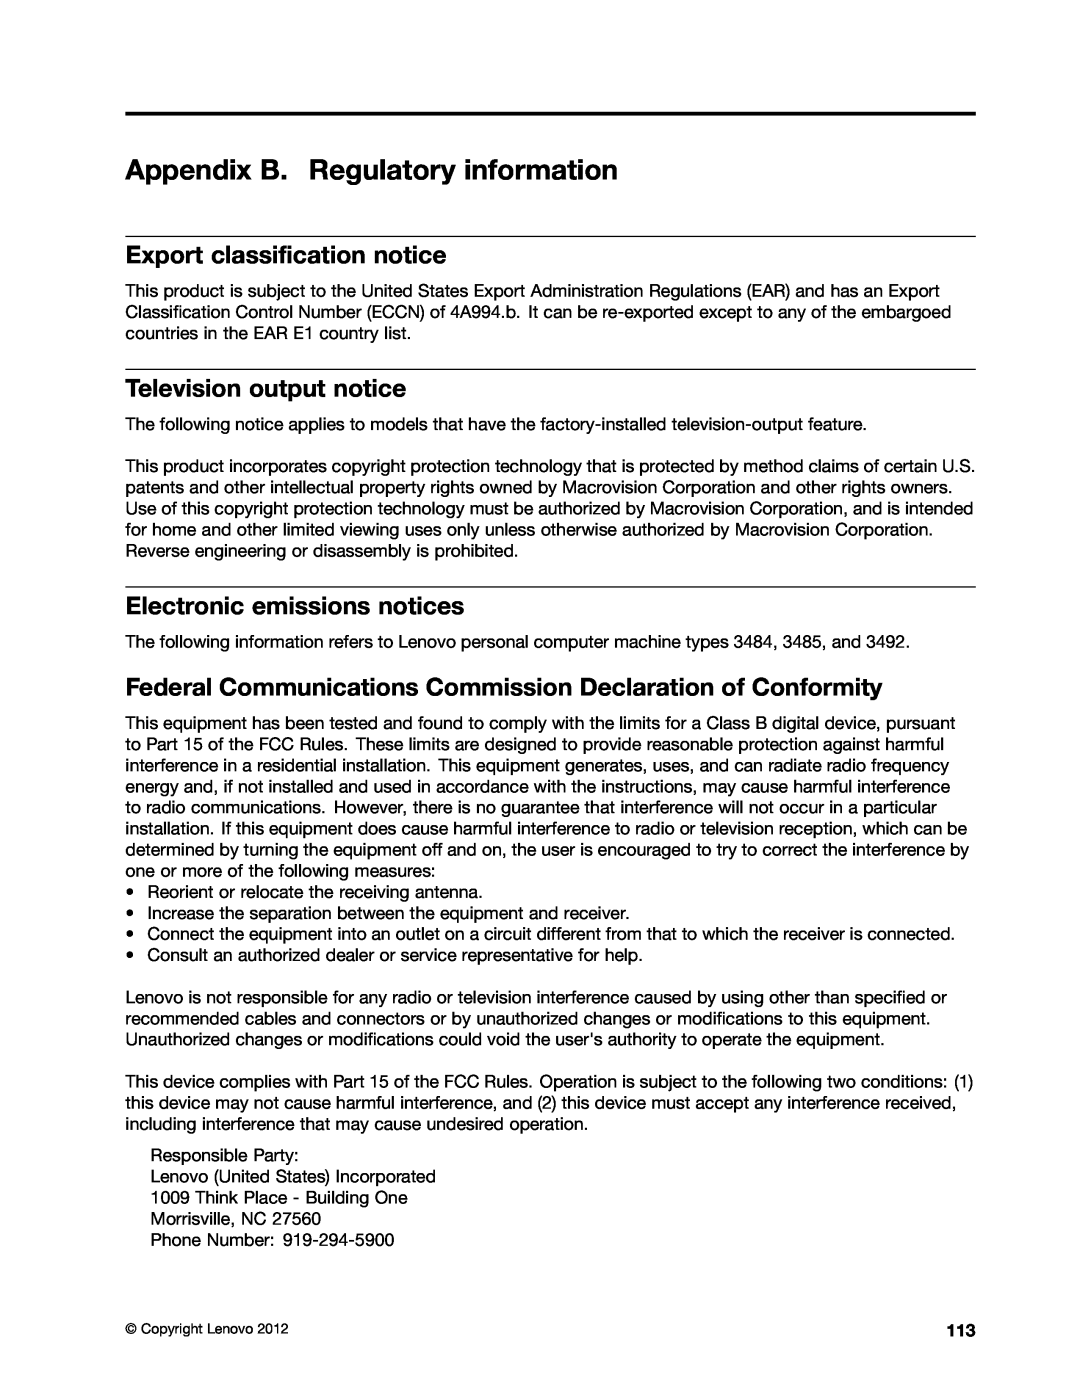 Lenovo 3484JMU manual Appendix B. Regulatory information, Export classification notice, Television output notice 